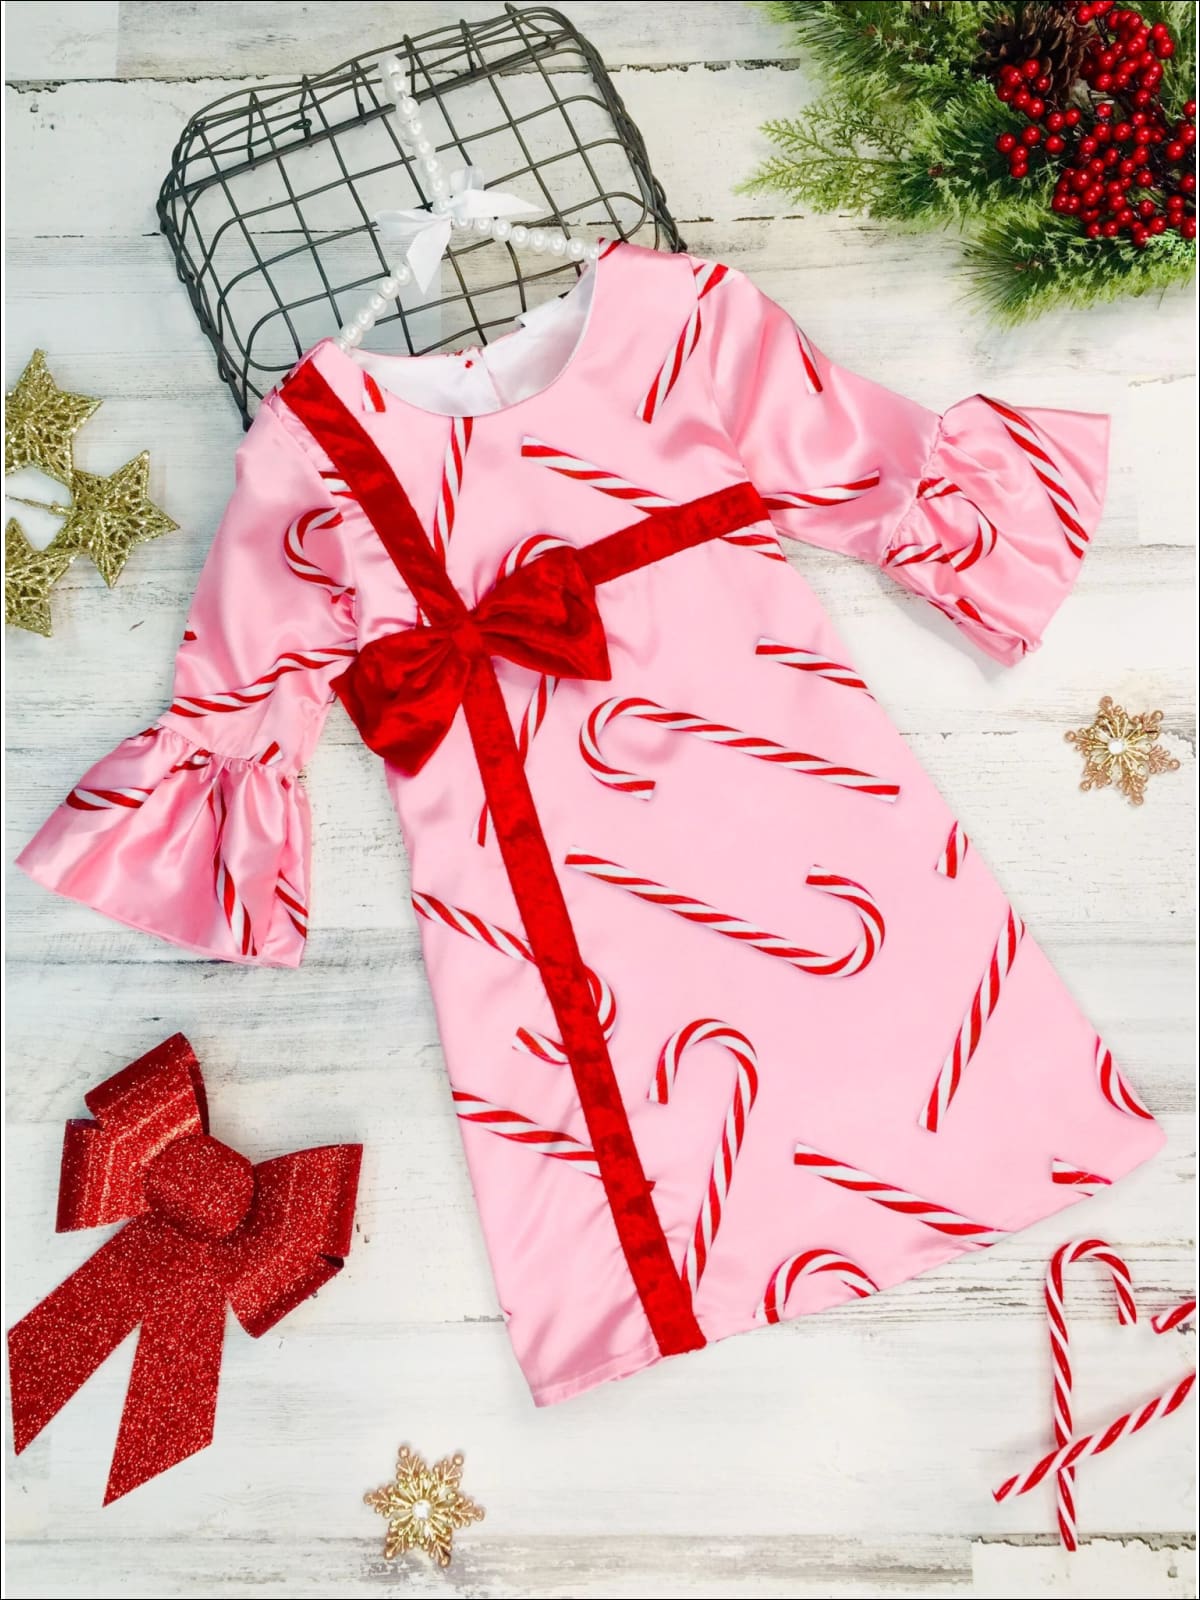 Girls Bell Sleeve Cross Over Bow Present Dress - Girls Christmas Dress